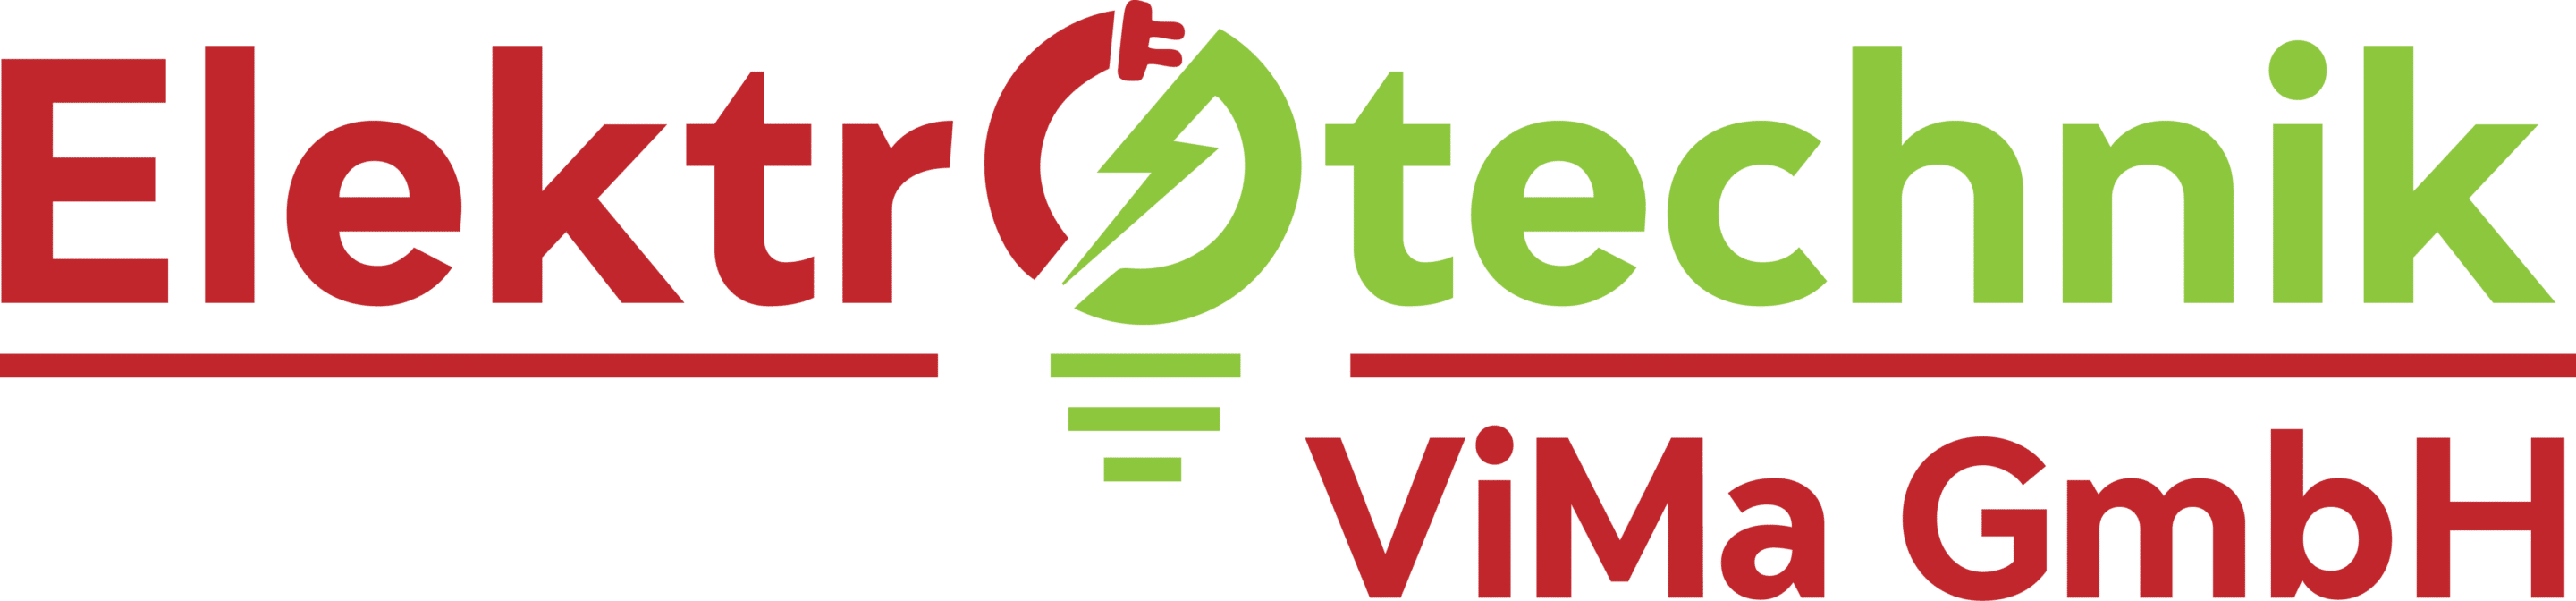 Elektrotechnik ViMa GmbH Logo